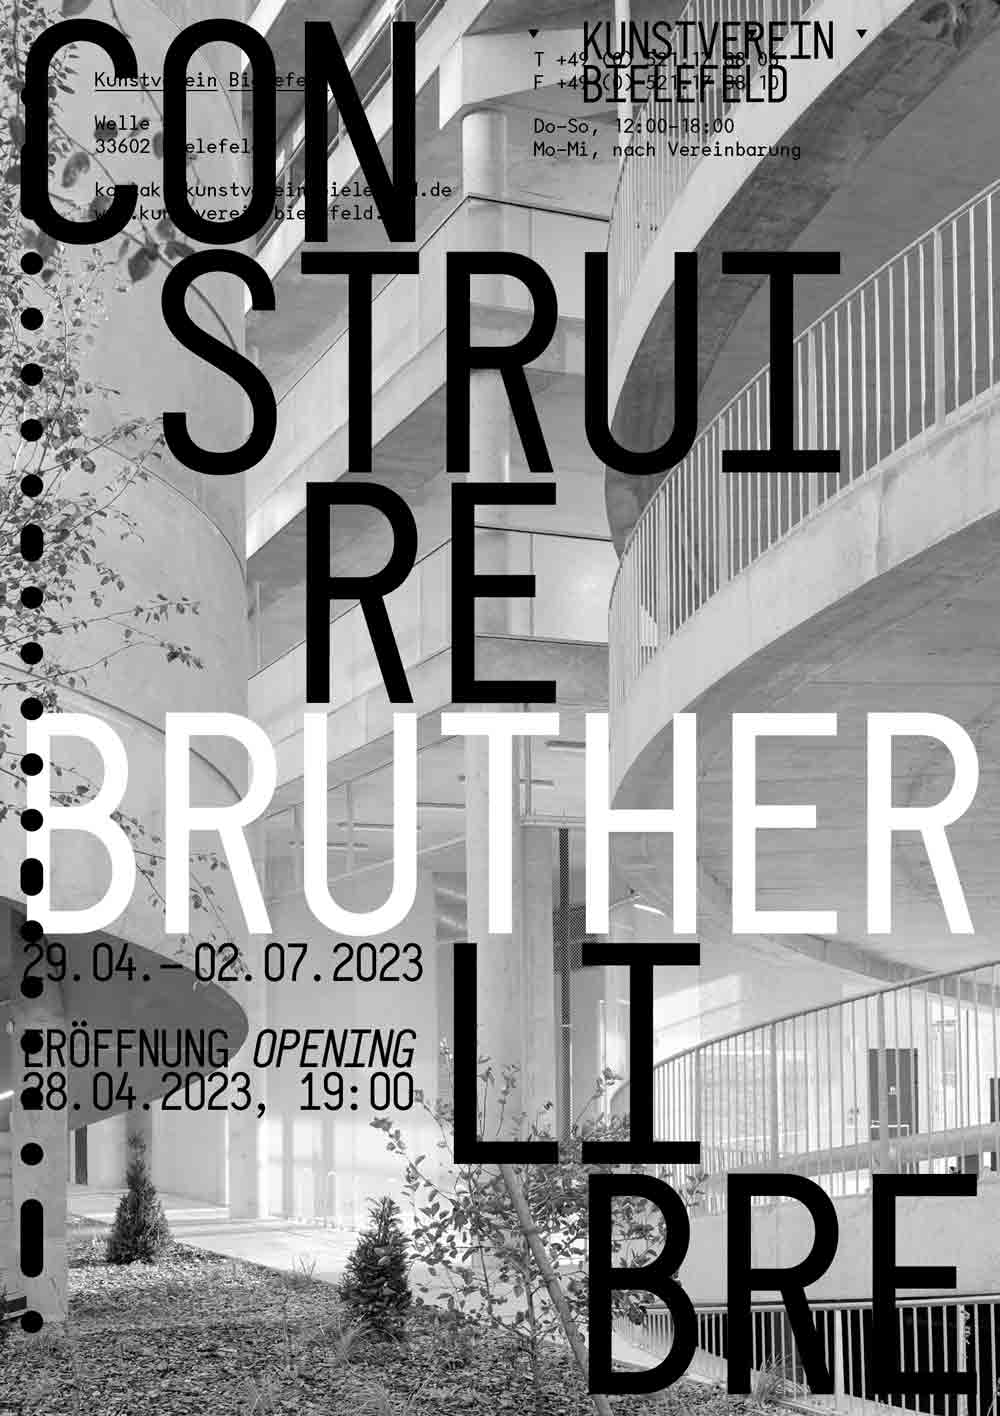 Kunstverein Bielefeld, Bruther, »Construire libre«, 29. April bis 2. Juli 2023